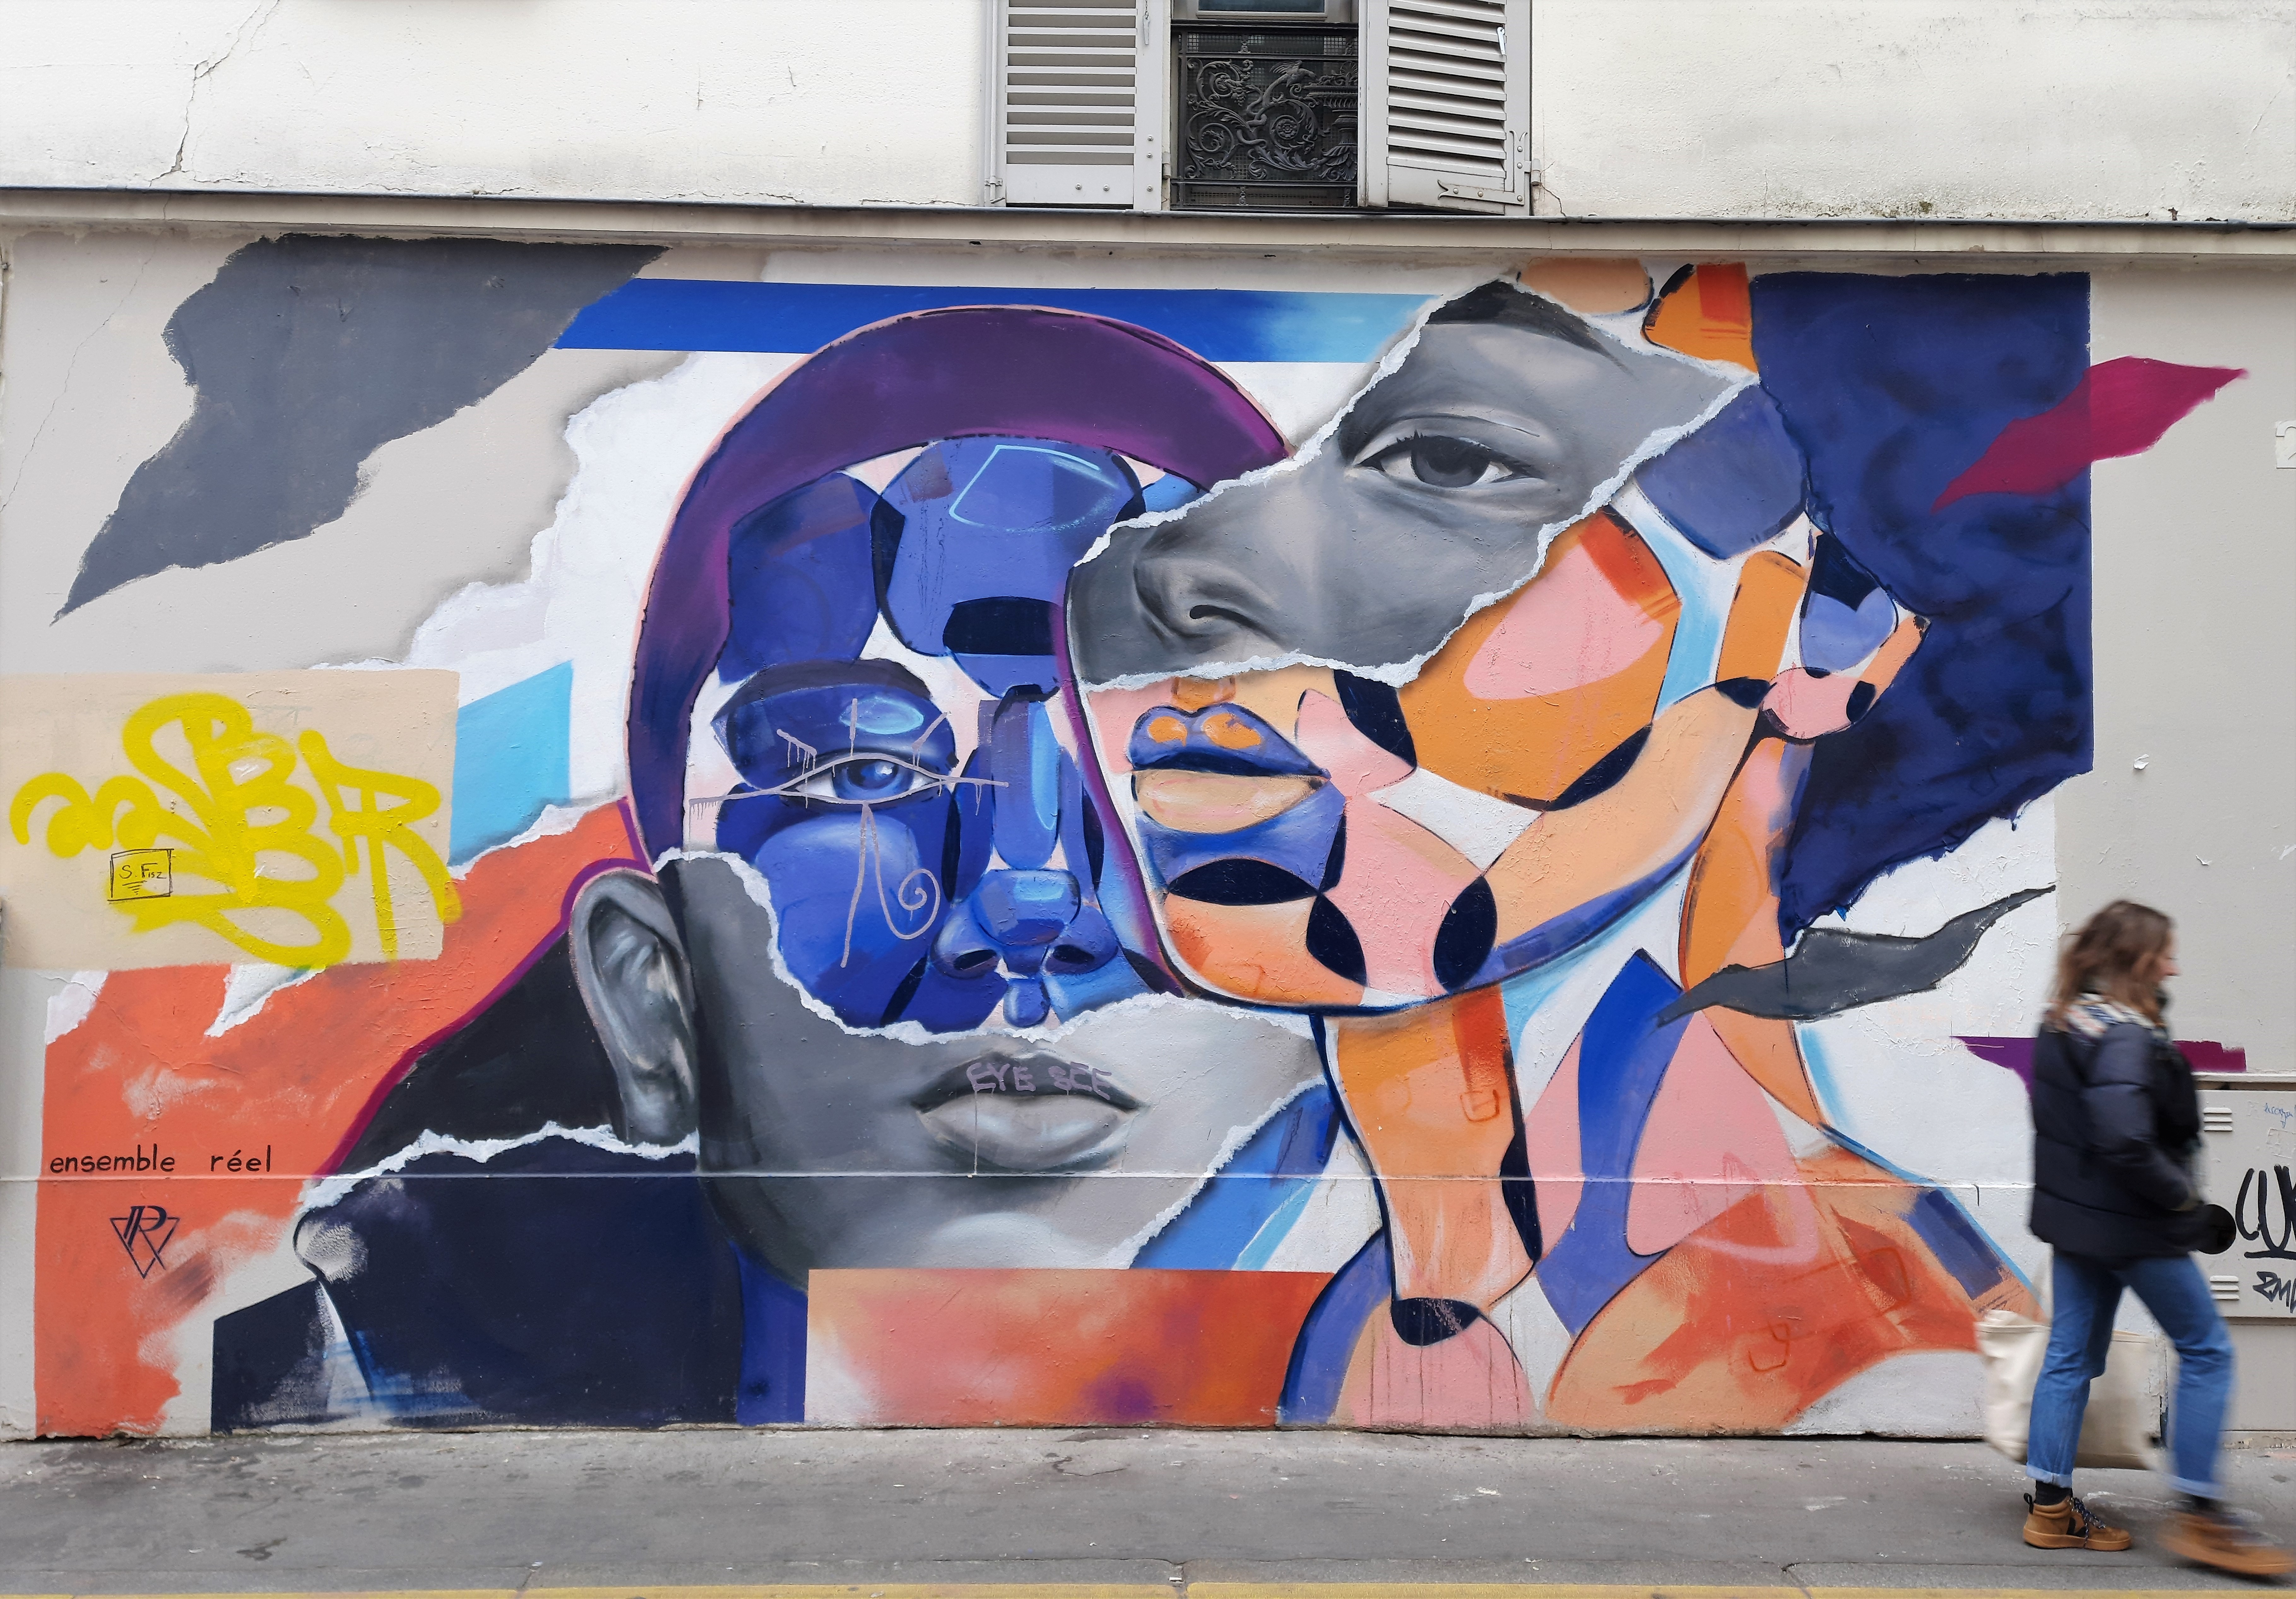 Graffiti 6535 ENSEMBLE REEL by the artist Ensemble Réel captured by Mephisroth in Paris France